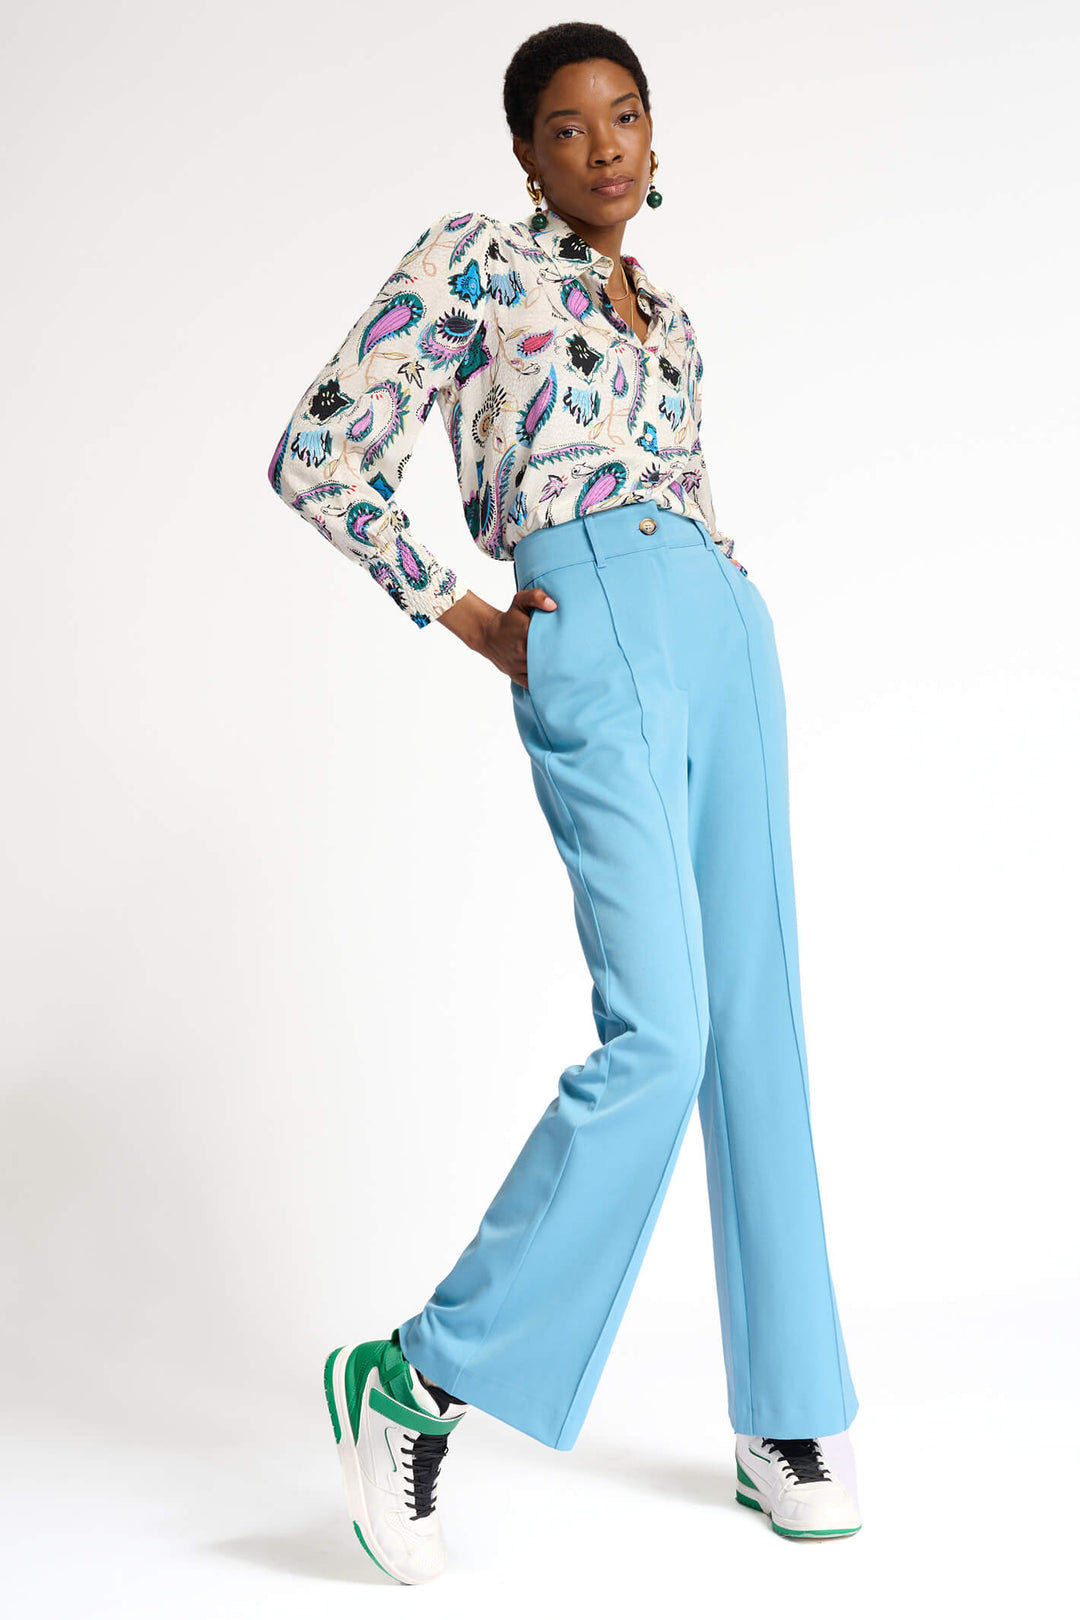 Pom Amsterdam SP6956 Blue Stoned Trousers - Olivia Grace Fashion